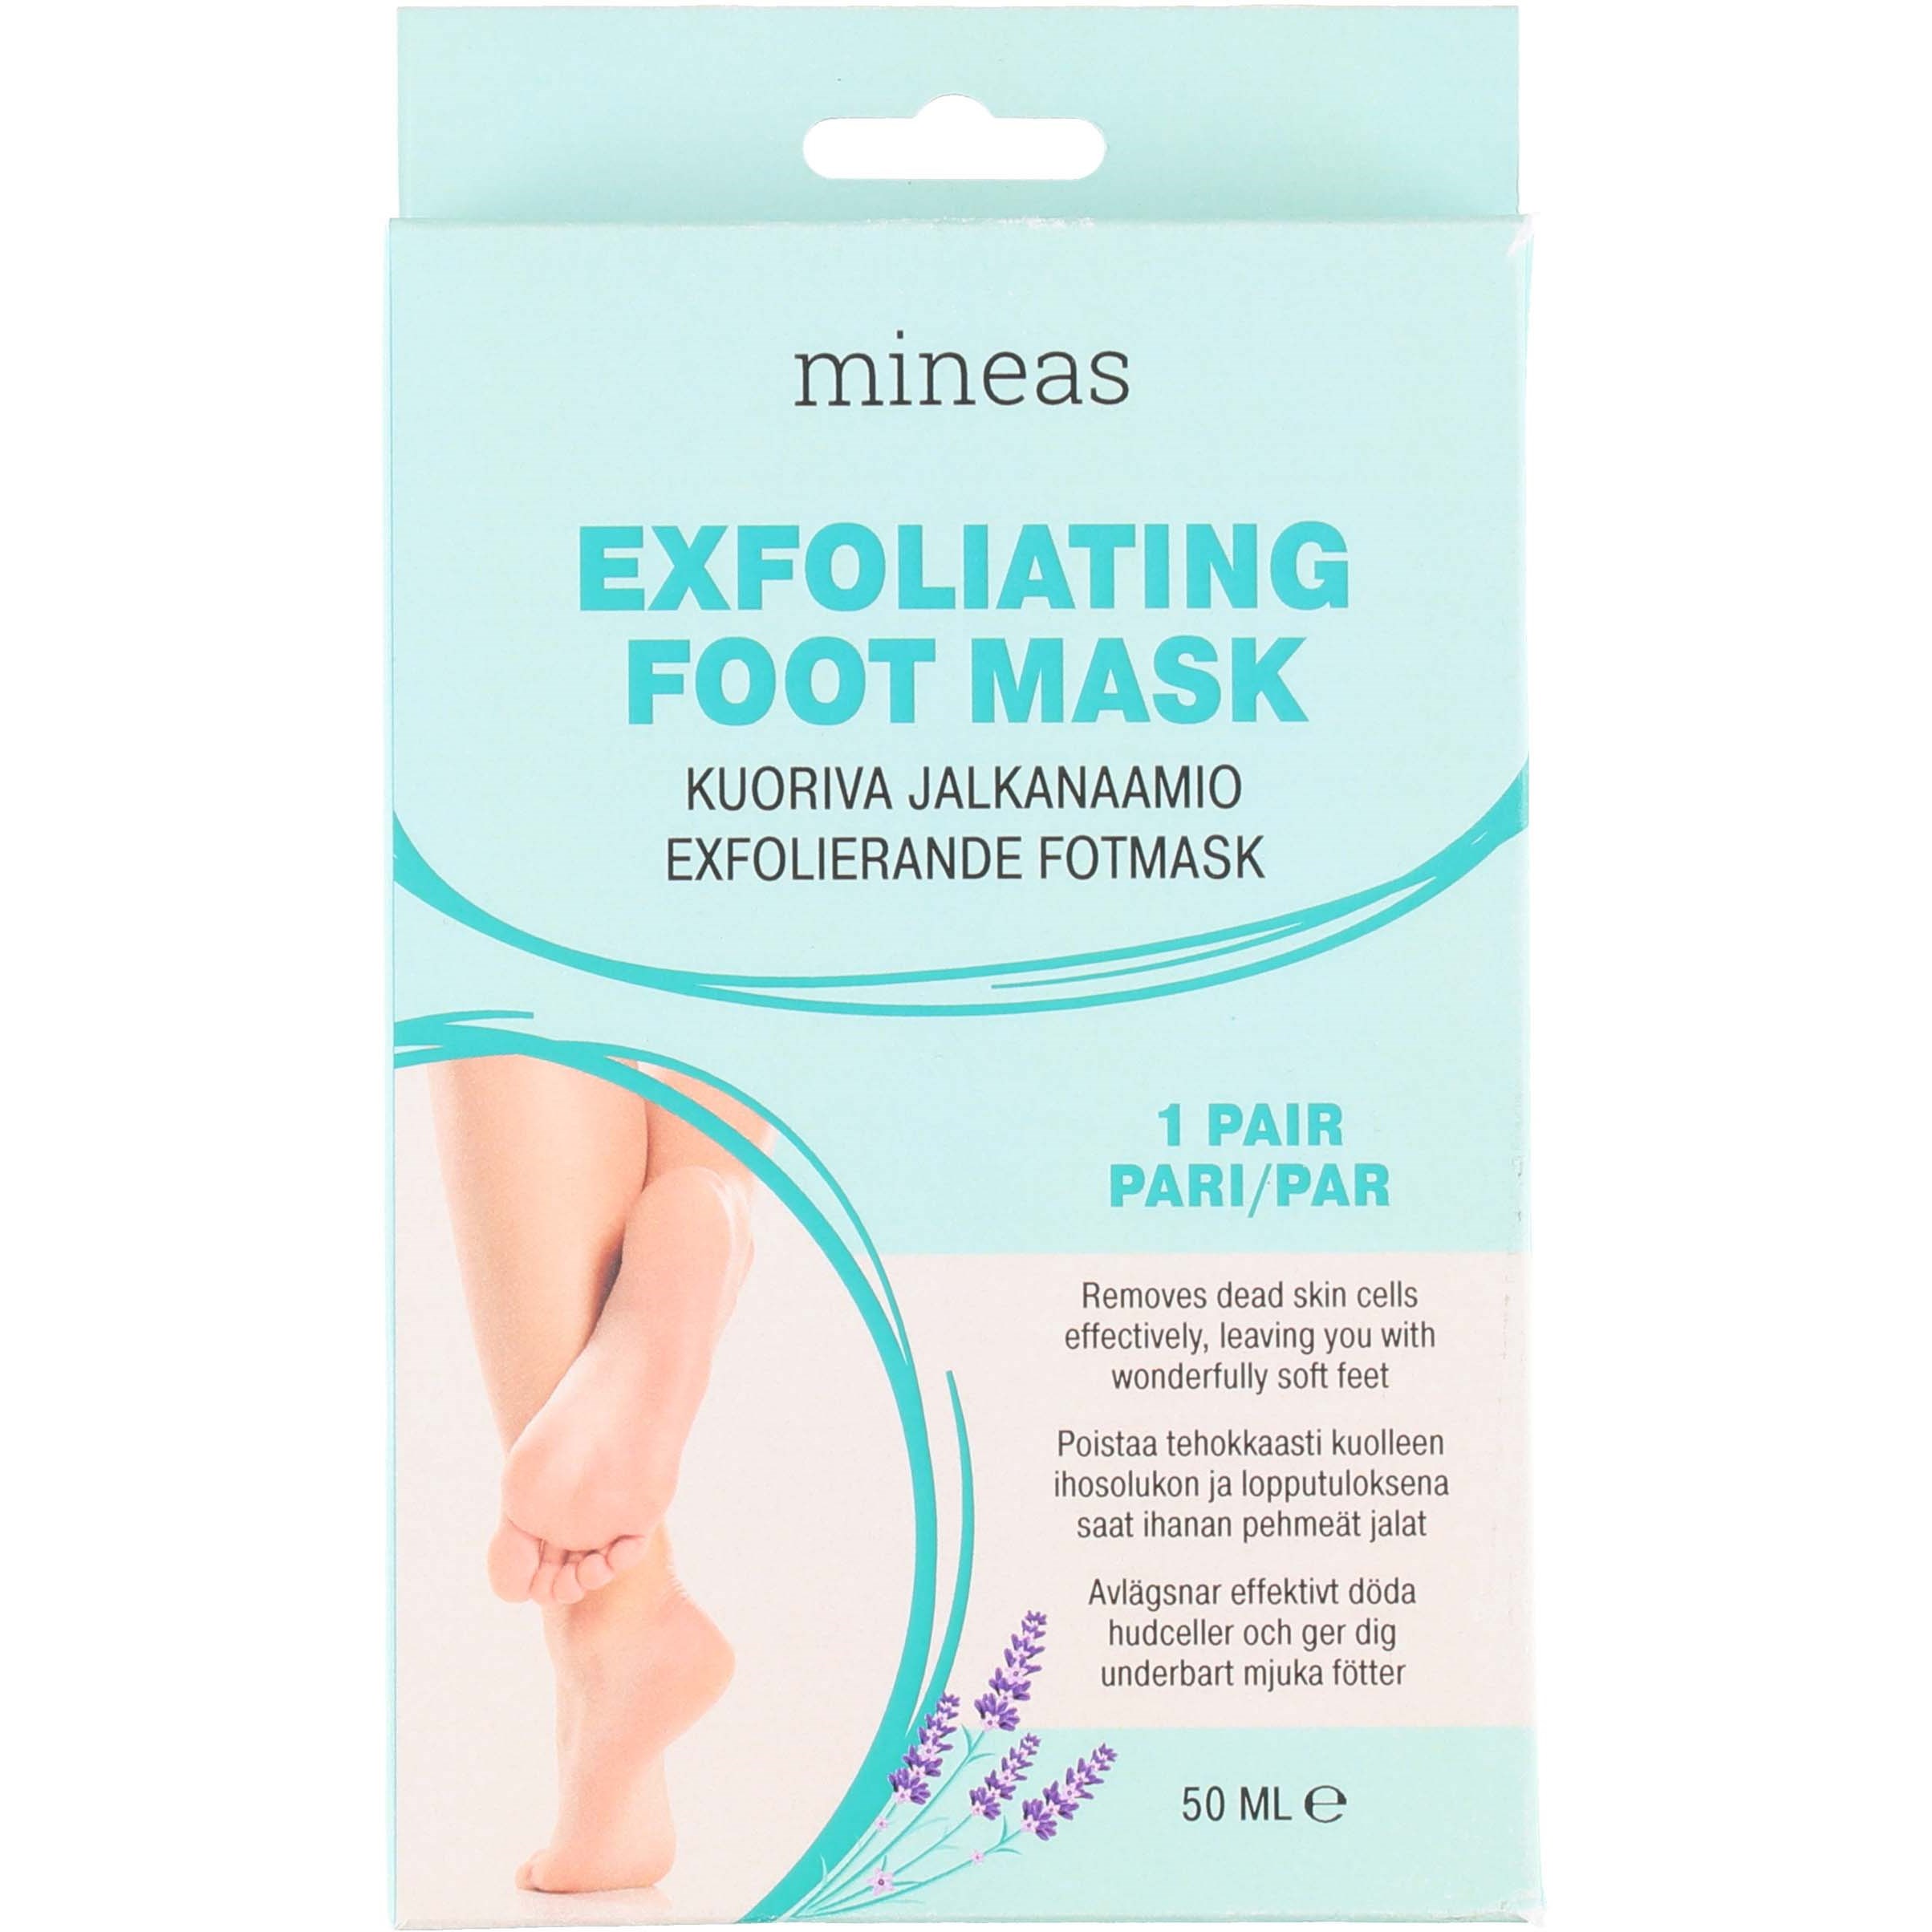 Läs mer om Mineas Exfoliating foot mask